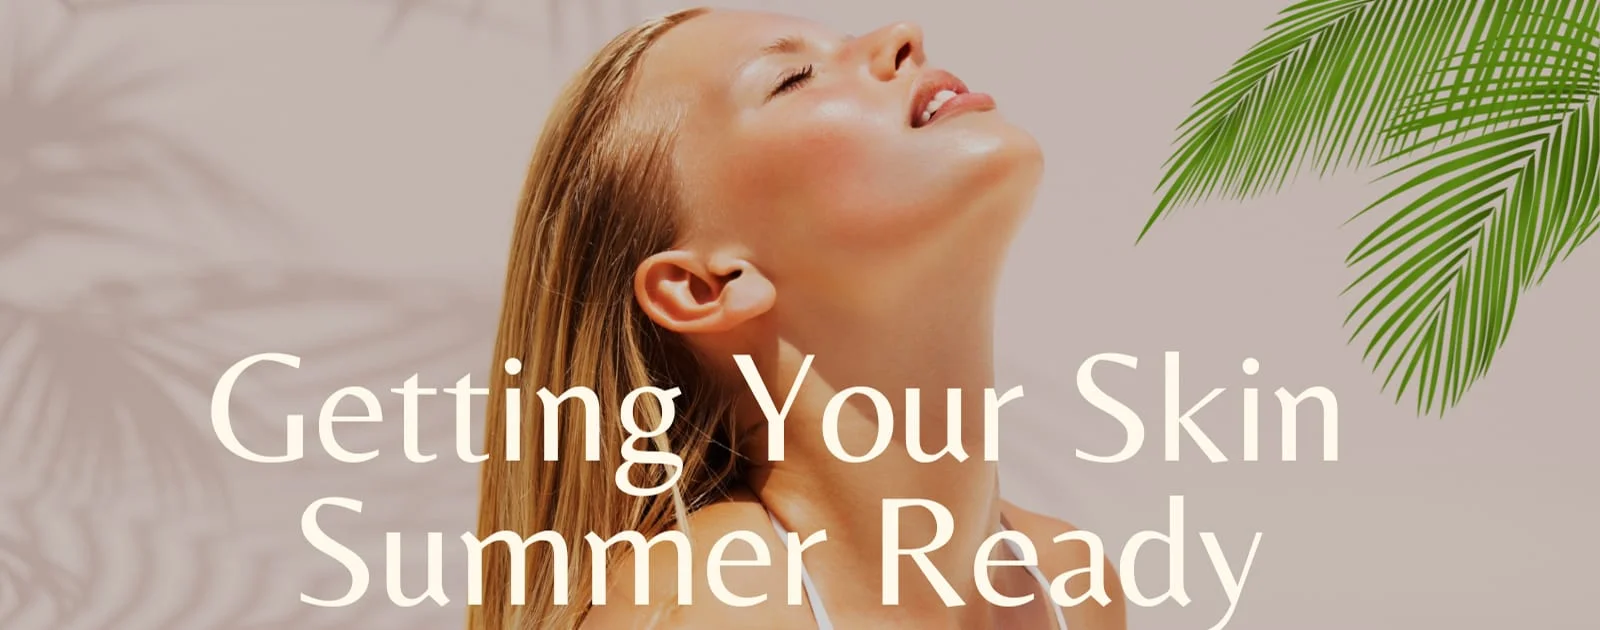 Summer Ready Skin Treatment